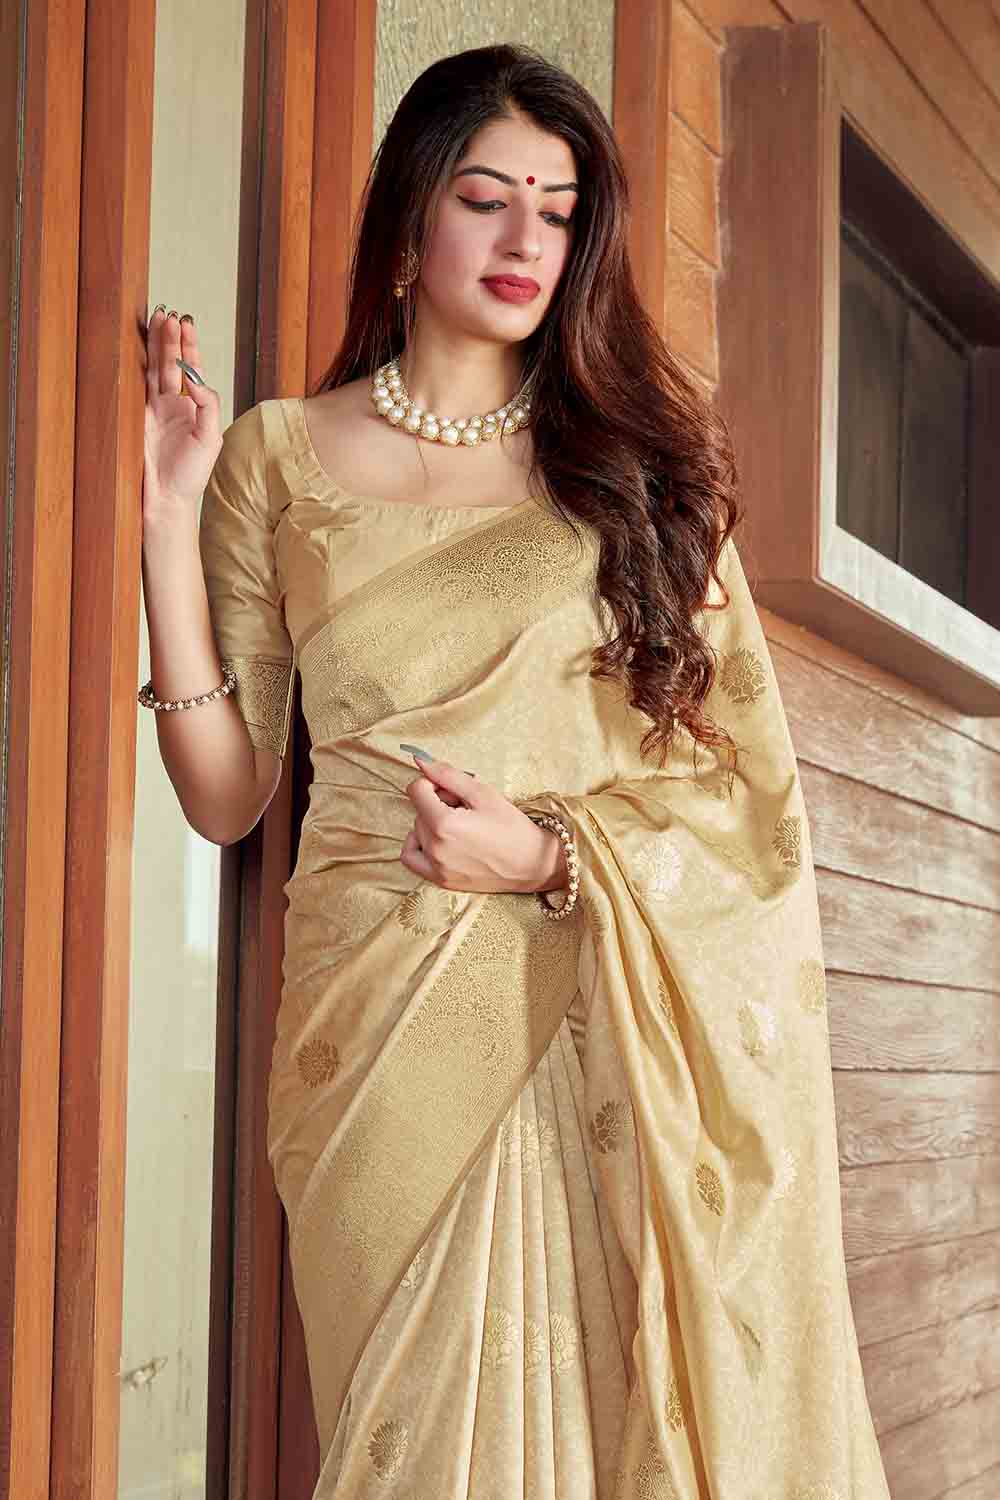 Beige And Golden Shaded Silk Bridal Saree Online | Bagtesh Fashion